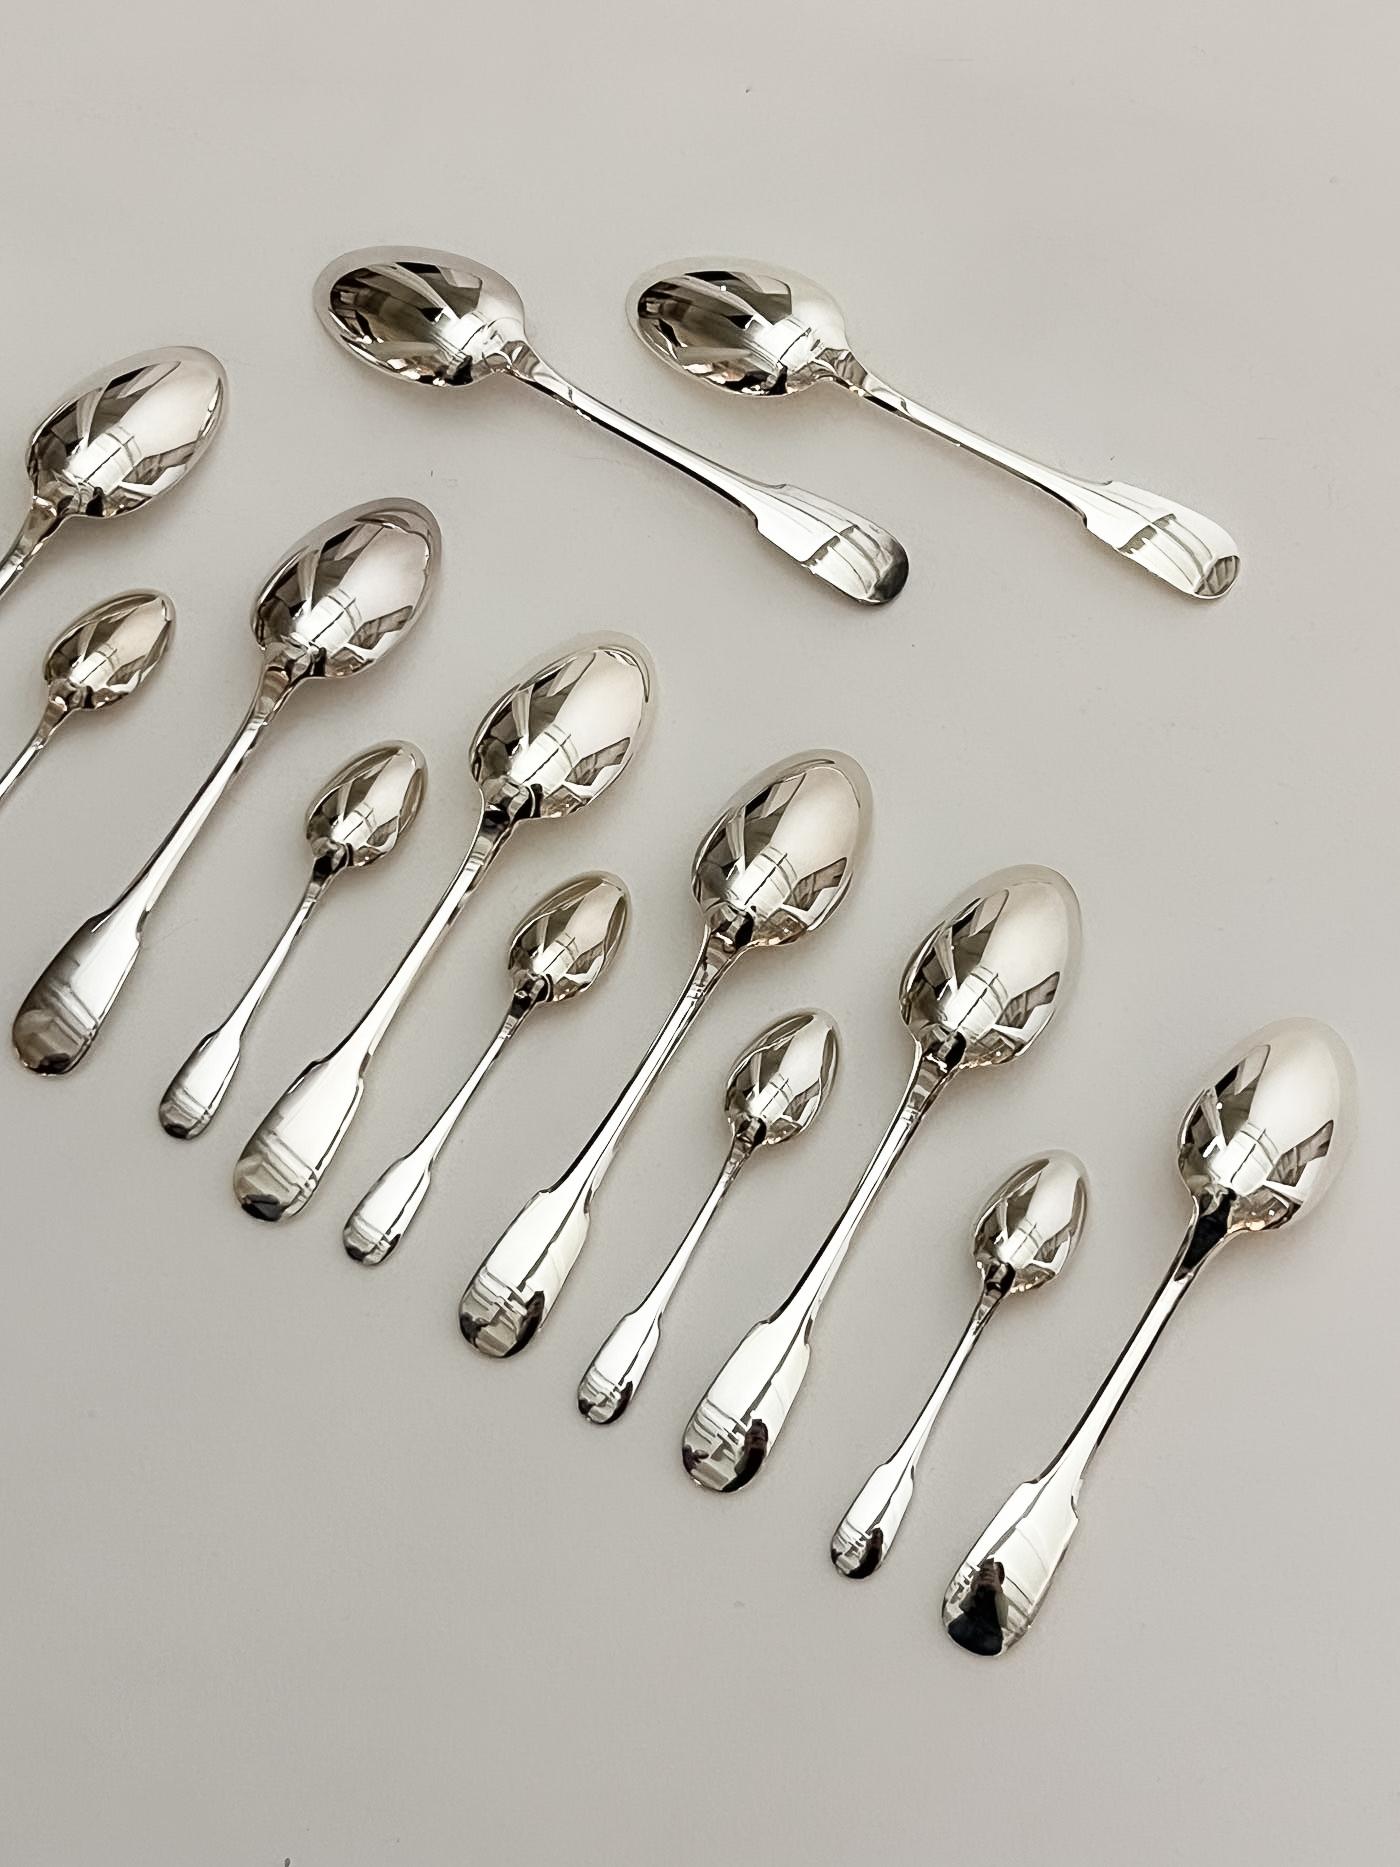 Christofle 26-piece silverware set For Sale 2